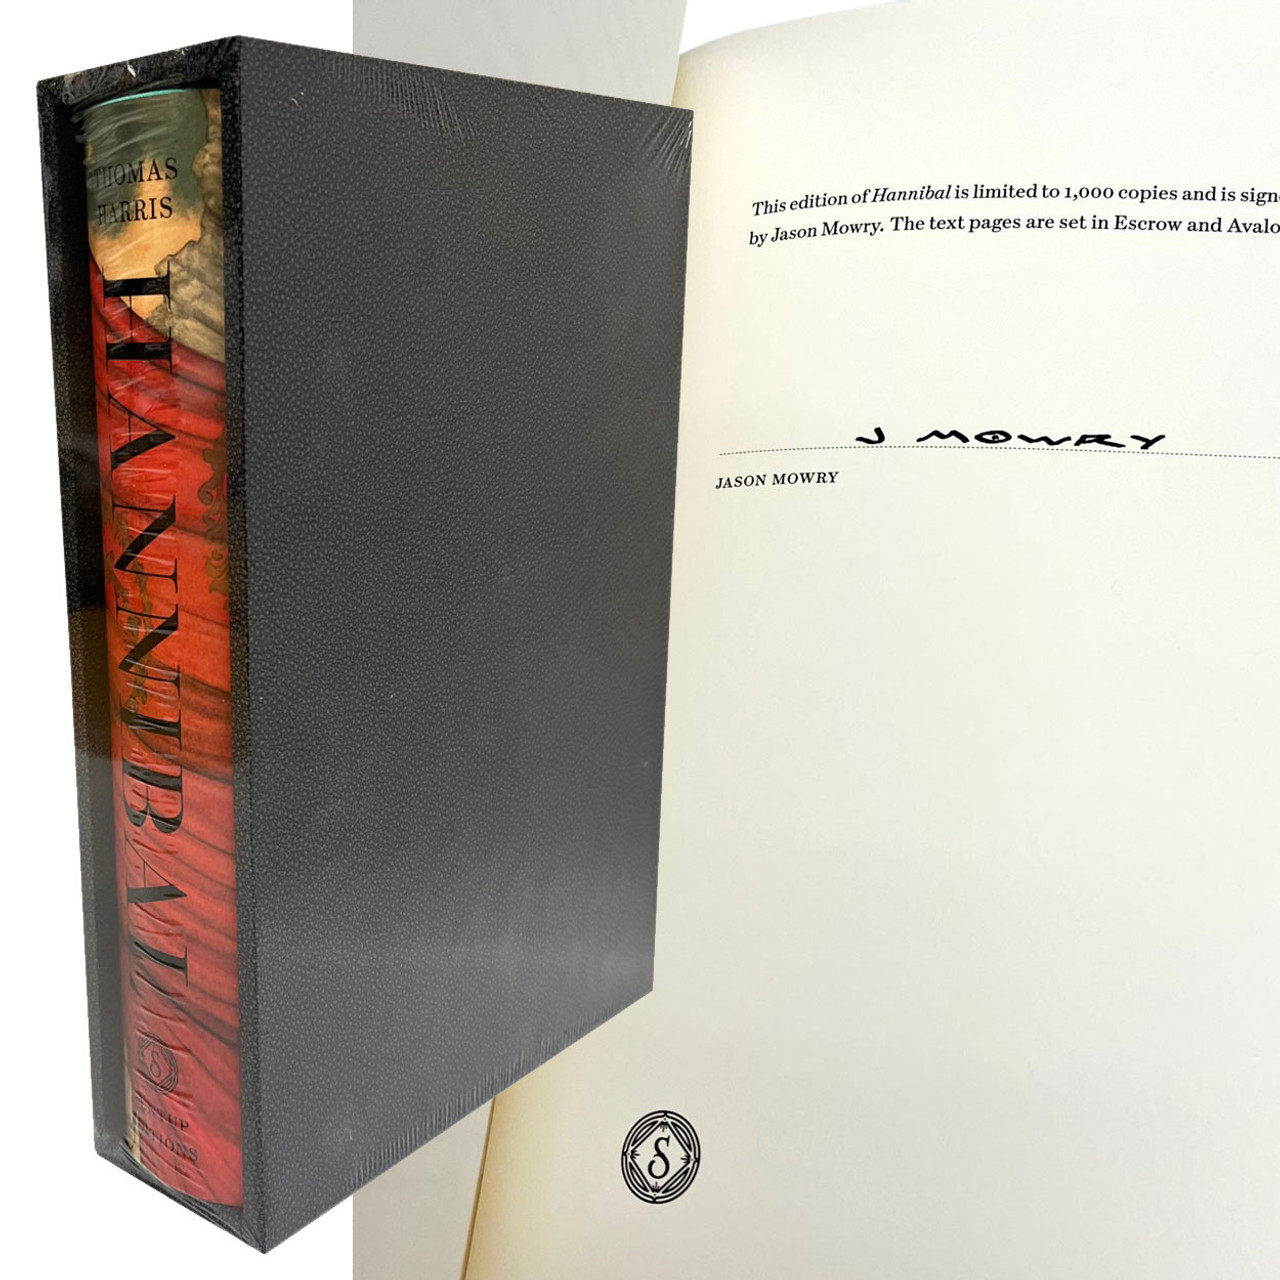 Thomas Harris "Hannibal" and "Hannibal Rising" 2-Vol. Set, Slipcased Signed Artist Edition of 1,000 [Sealed]